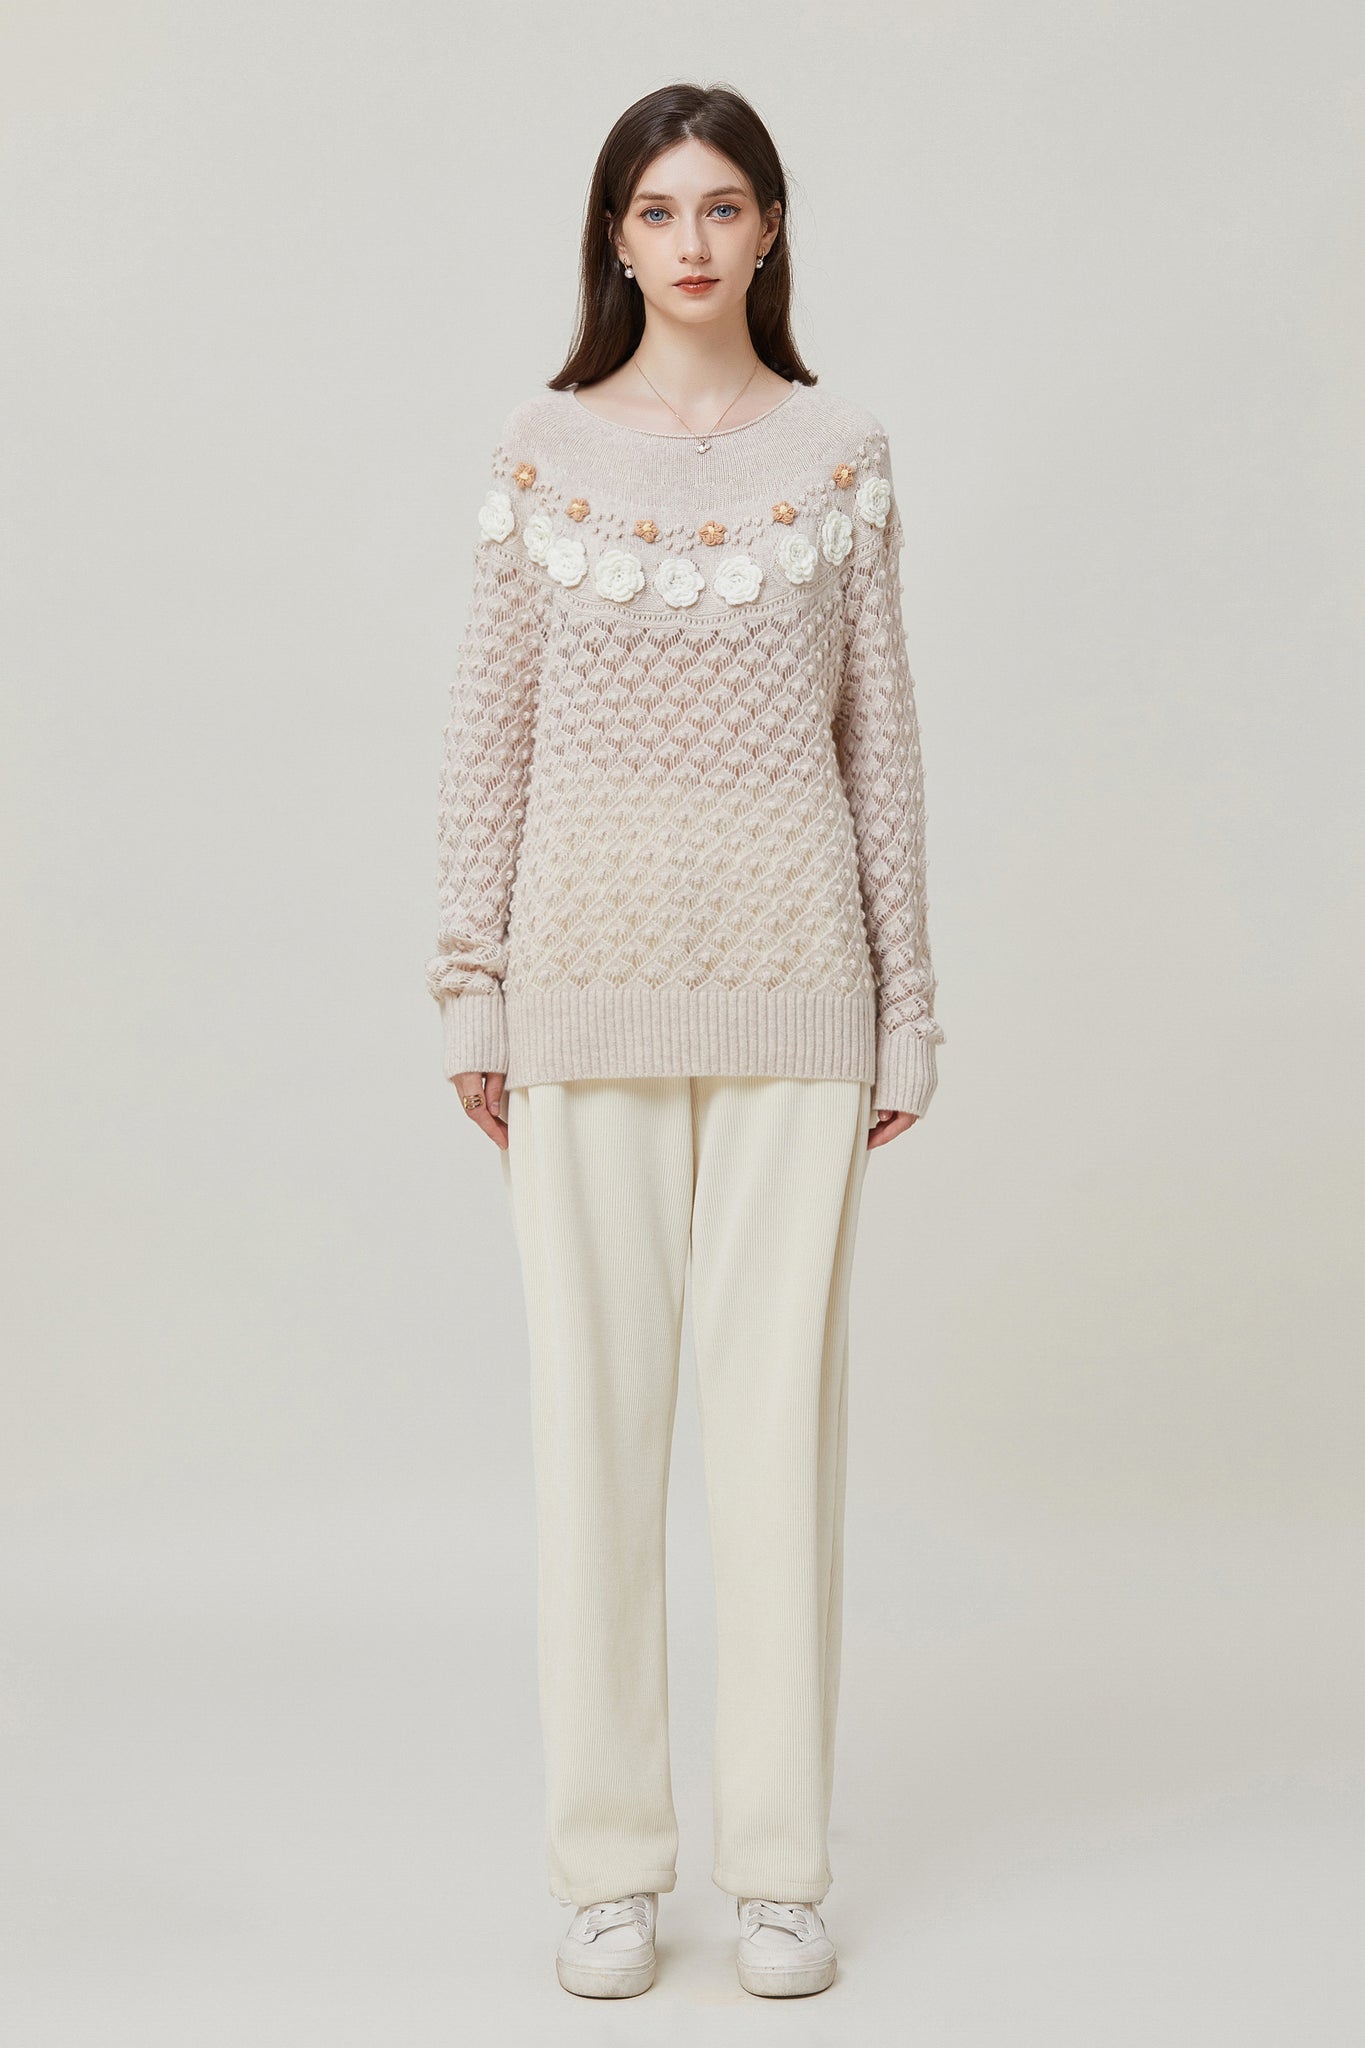 Fangyan | Keller 3D Floral Cashmere Sweater